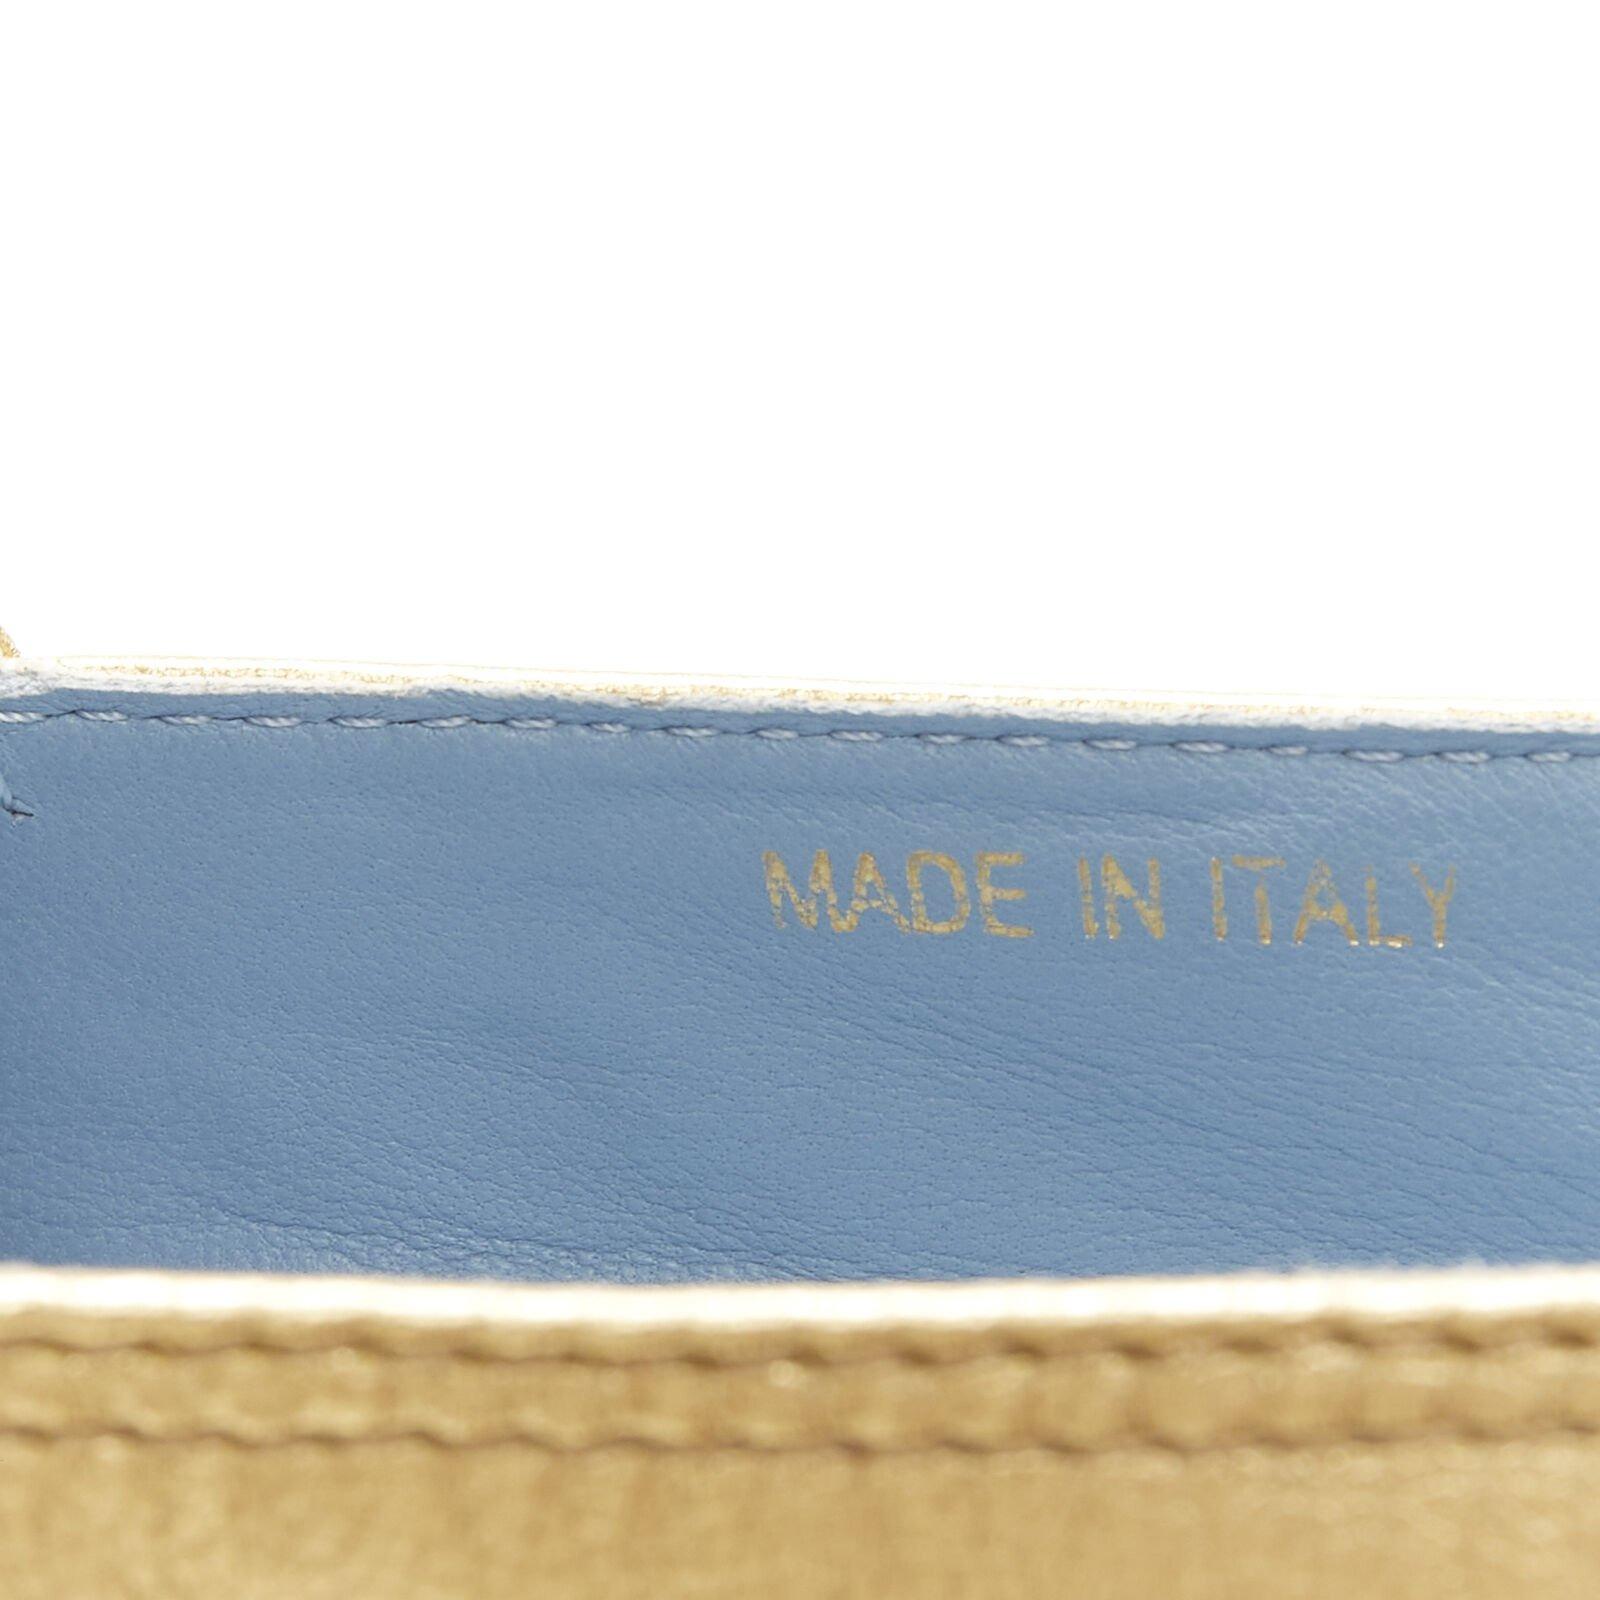 new PRADA metallic gold leather logo peep toe jute platform espadrille shoe EU37 6